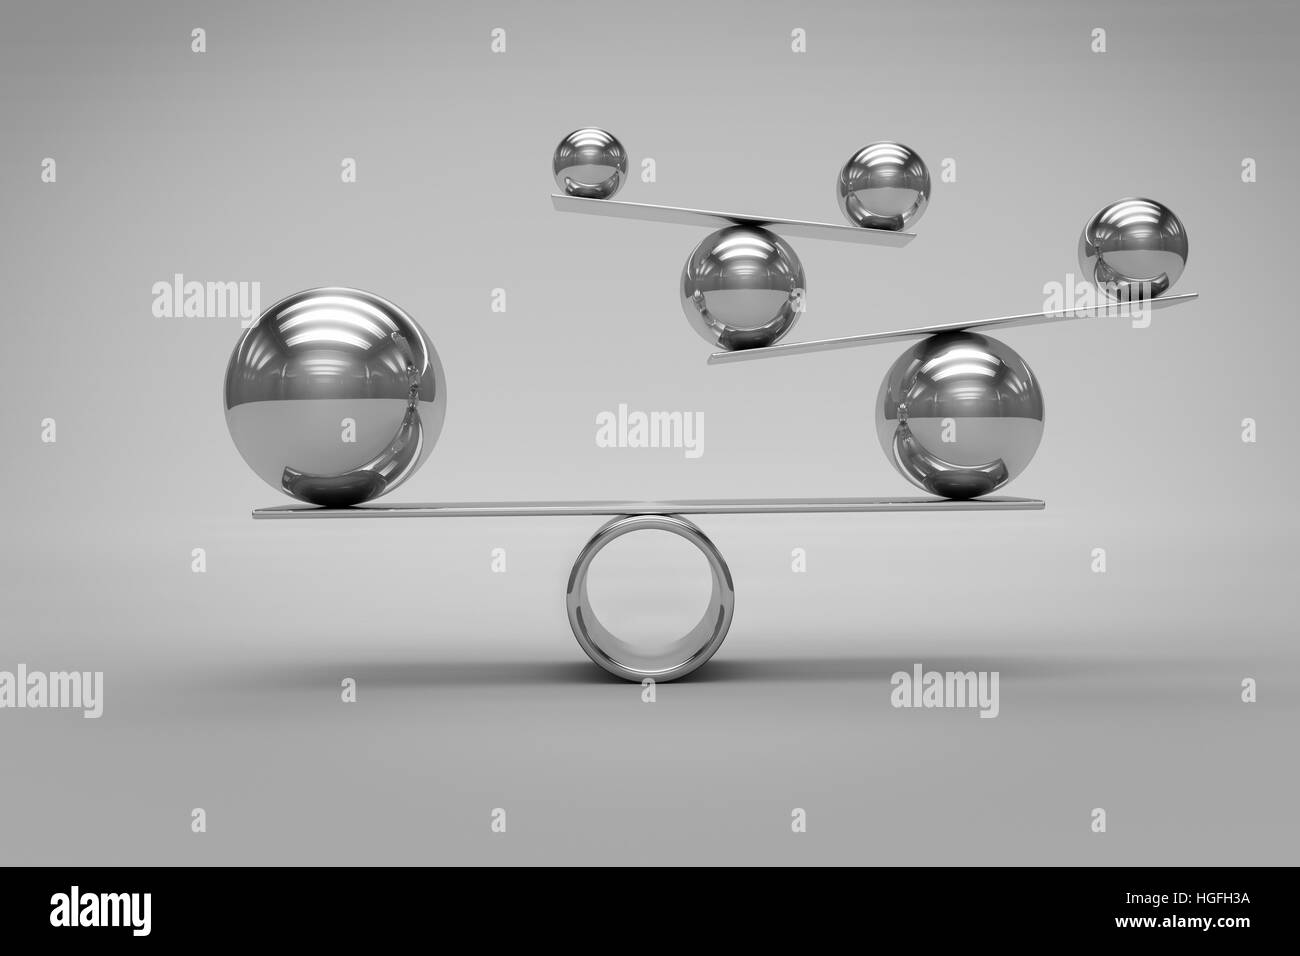 Balance Concept with Chrome Balls Stock Photo